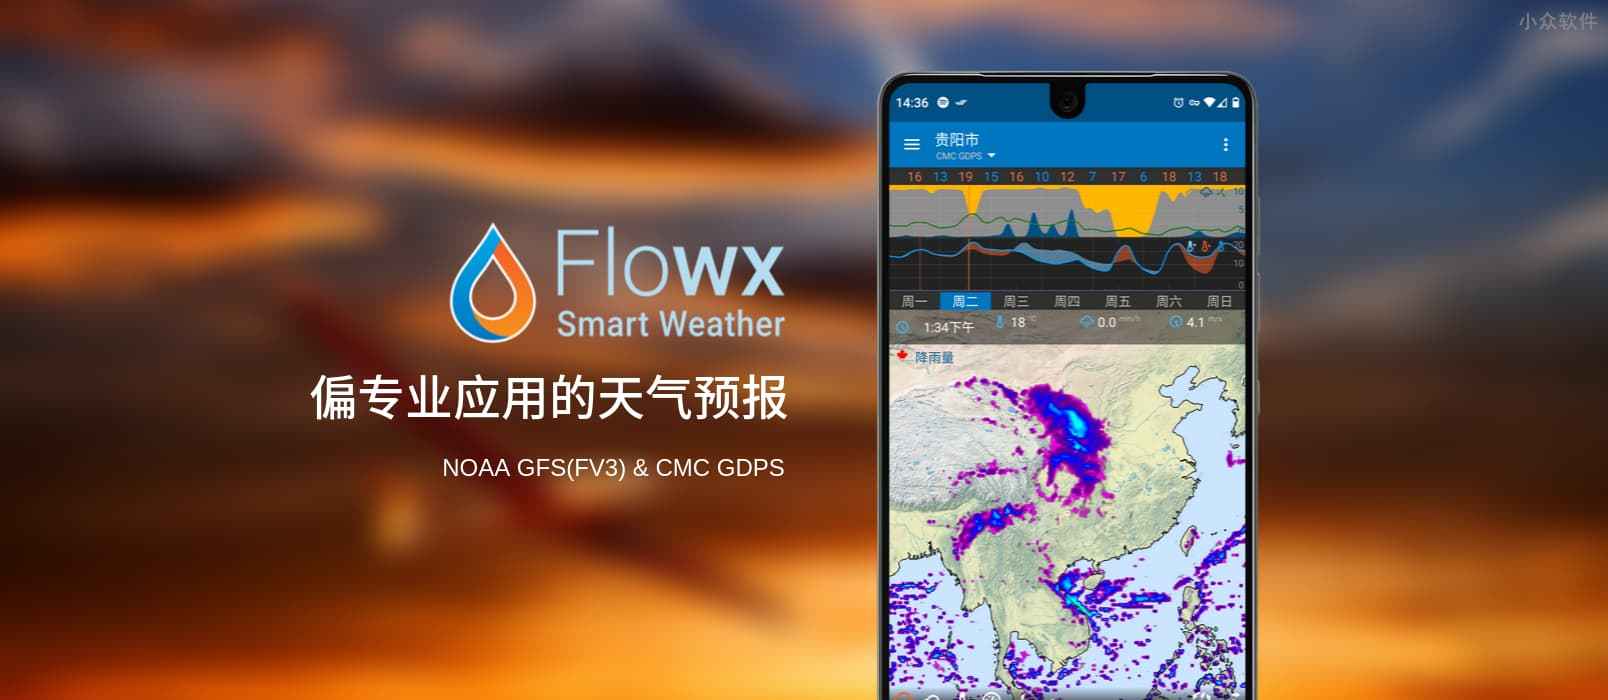 Flowx – 适合航拍、航海、徒步、钓鱼的专业天气预报应用[Android]